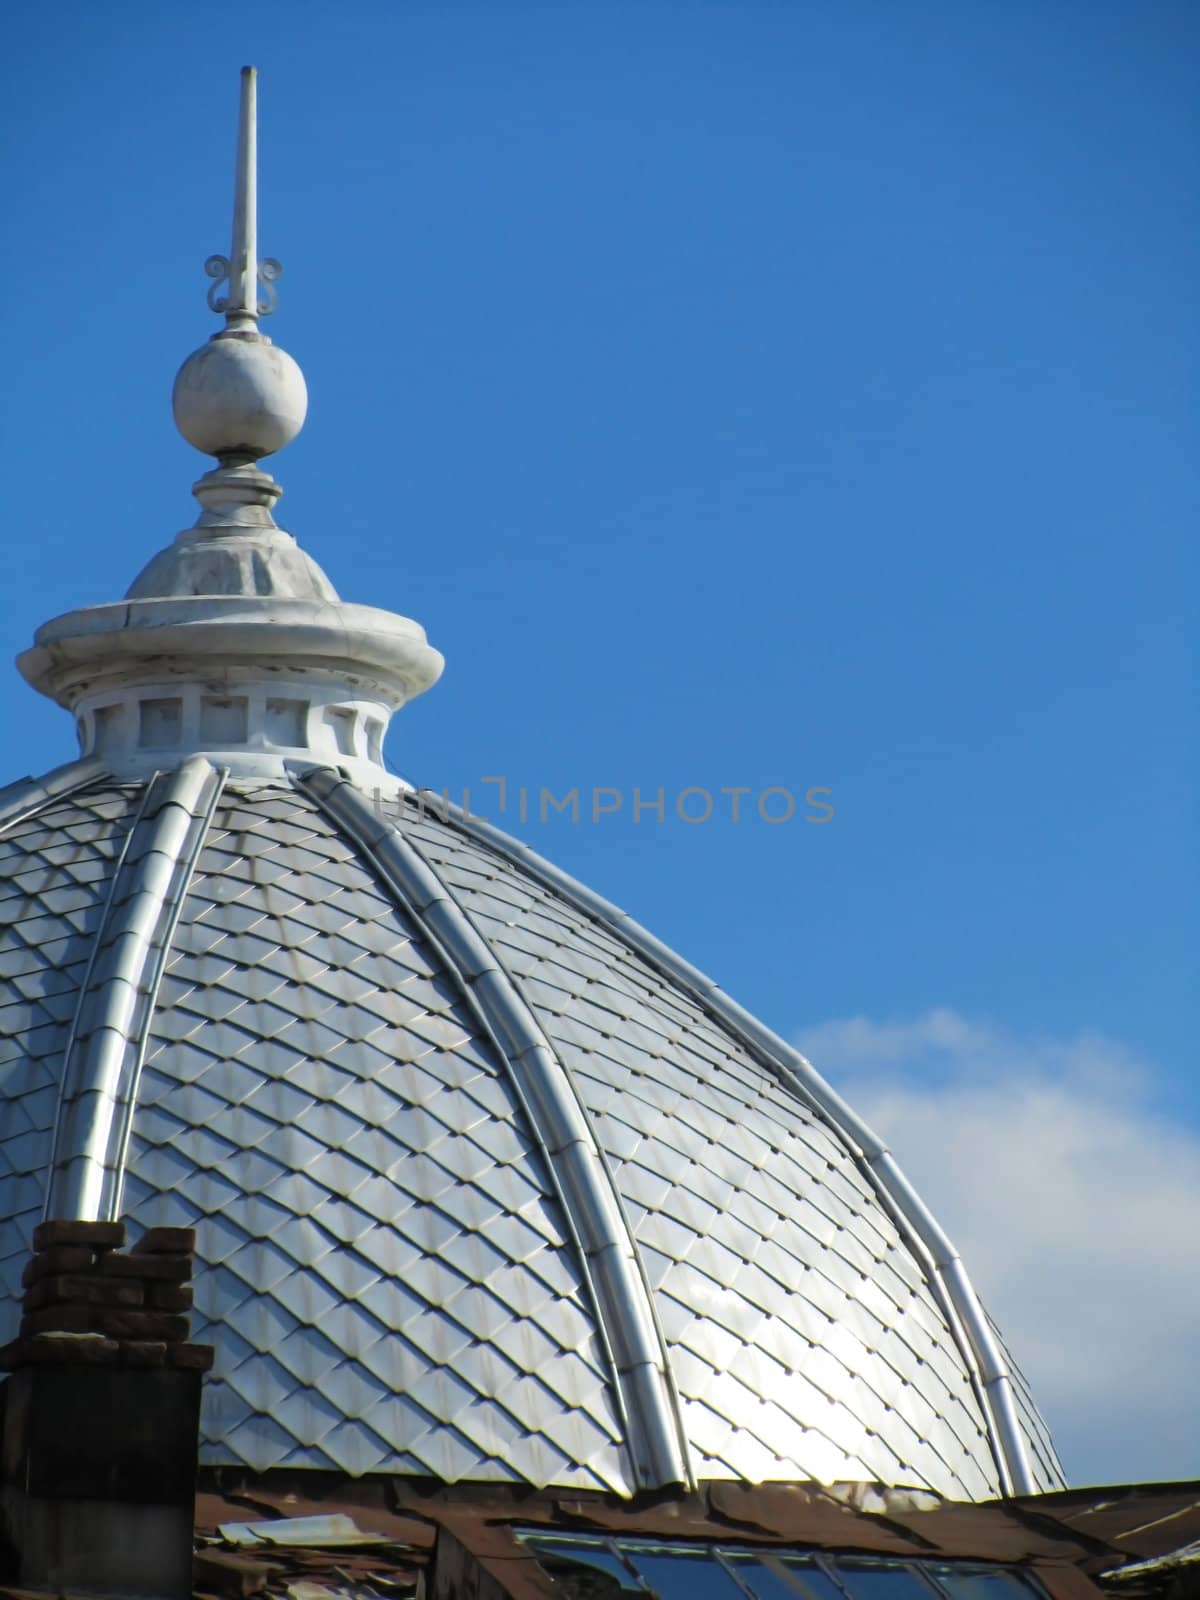 Dome on a blue sky by etrarte